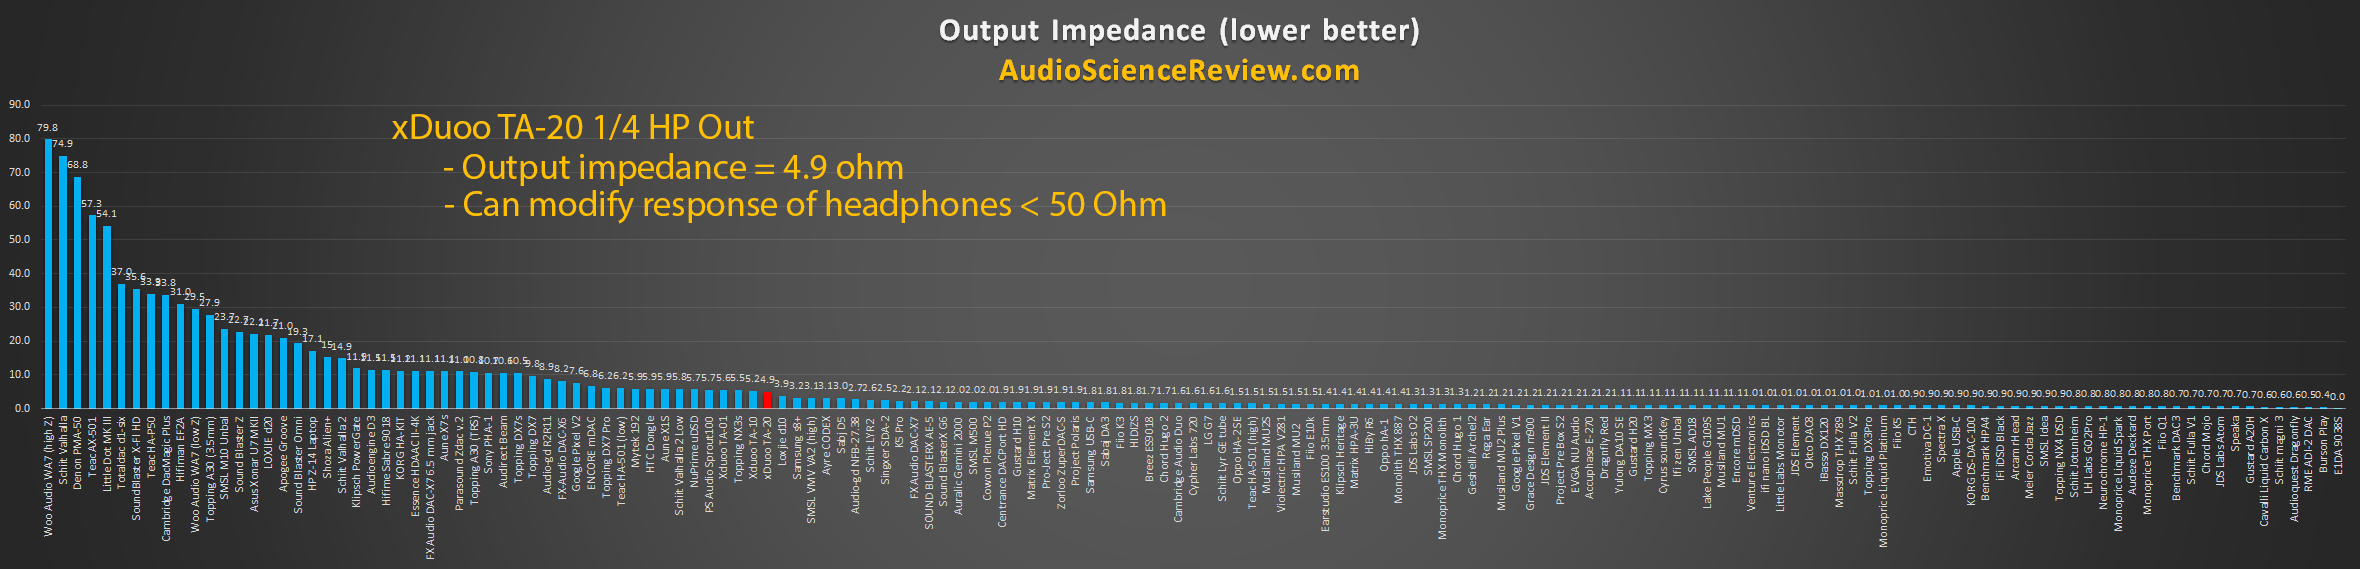 Headphone Amplifier Output Impedance Measurements 2019.png